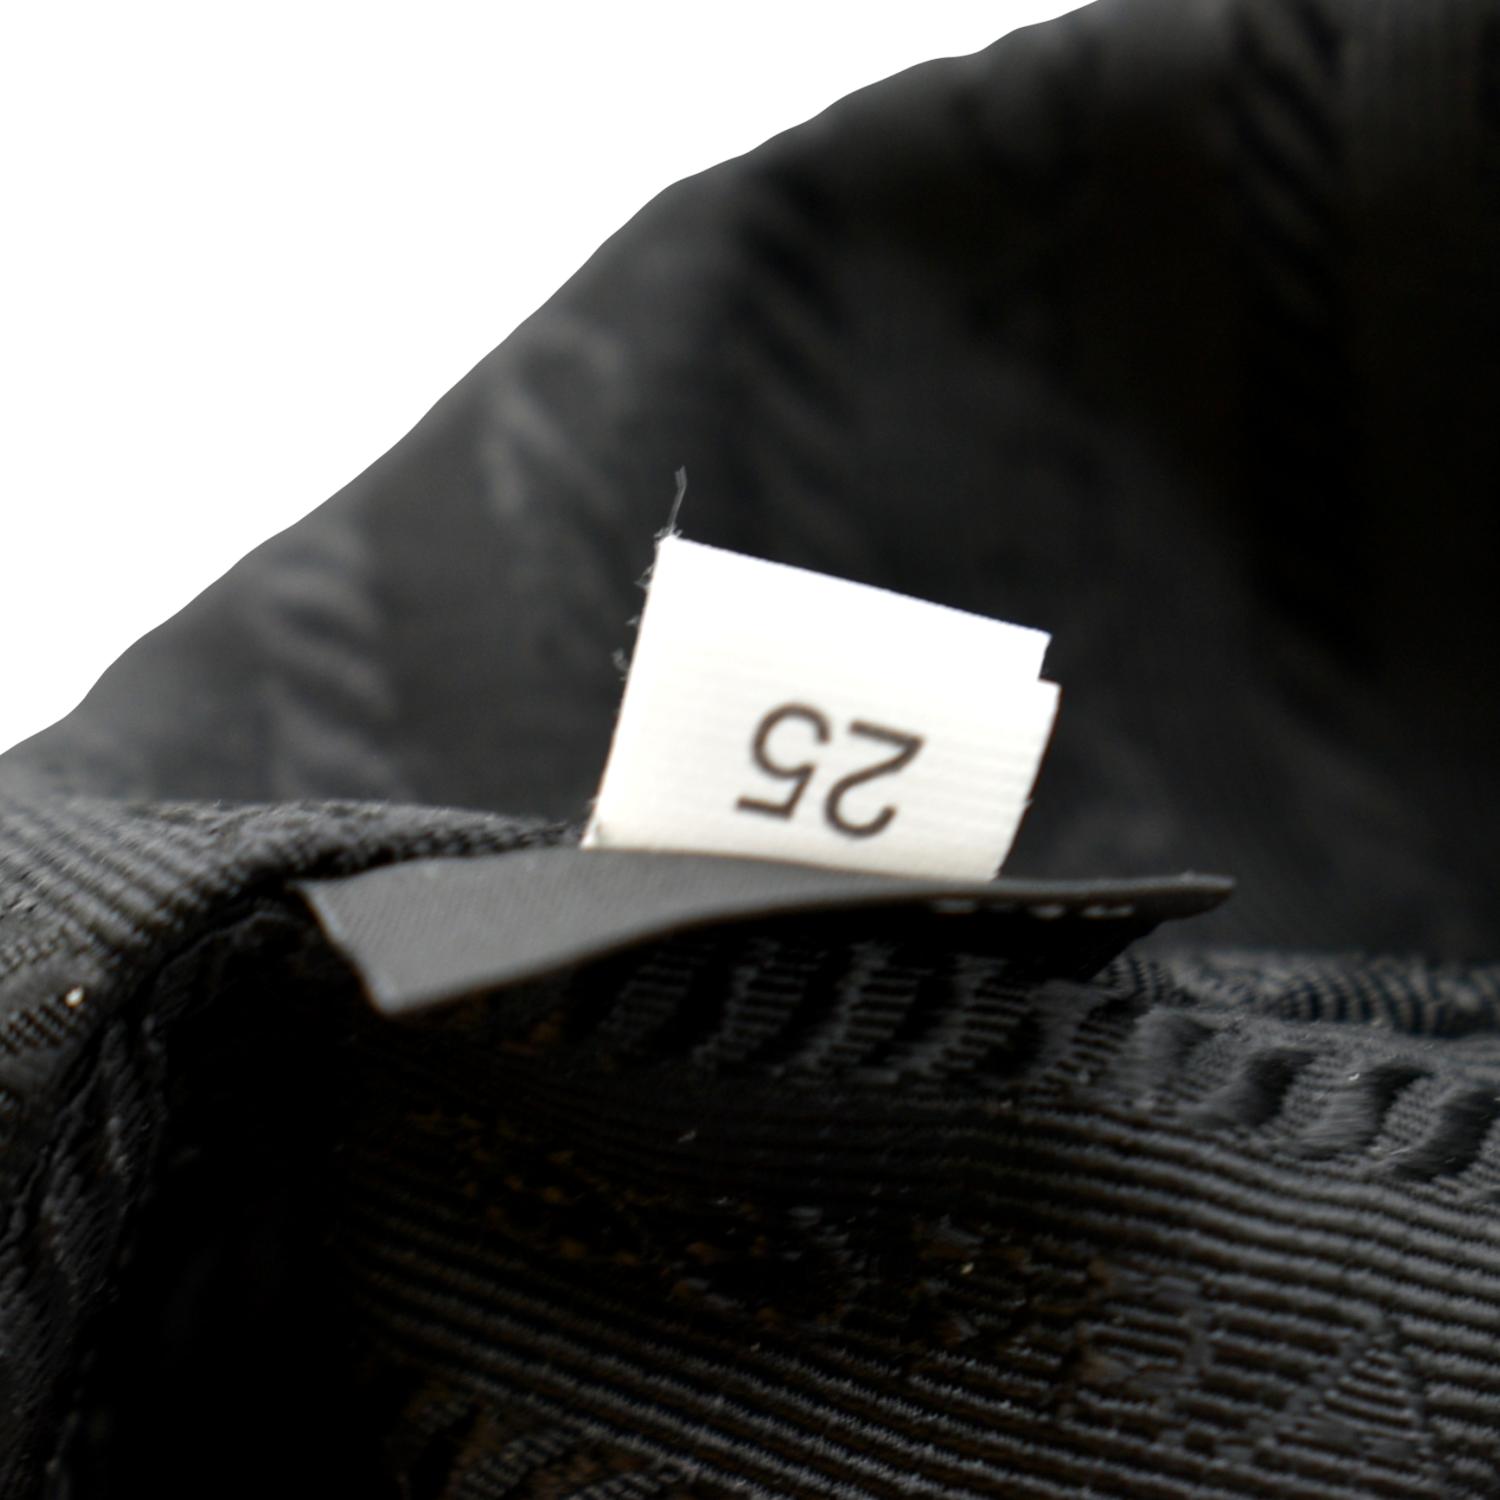 Prada Leather Cross Body Bag Black Gold Re-Edition 2005 Saffiano Leather Bag  – The Luxury Shopper